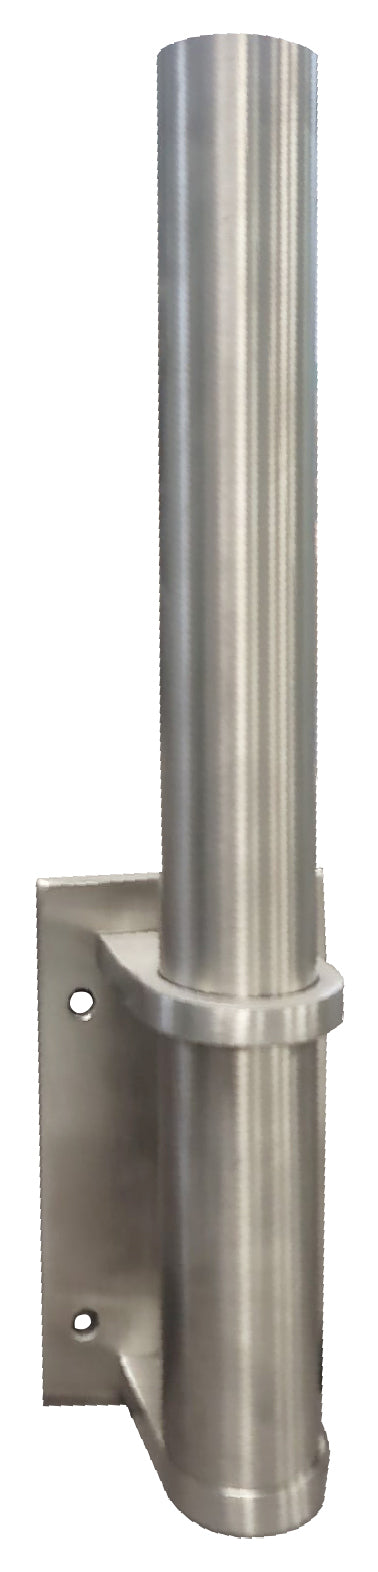 IGSIDEFLANGE424BS Brida lateral de acero inoxidable cepillado para tubo redondo 42,4 mm SS316